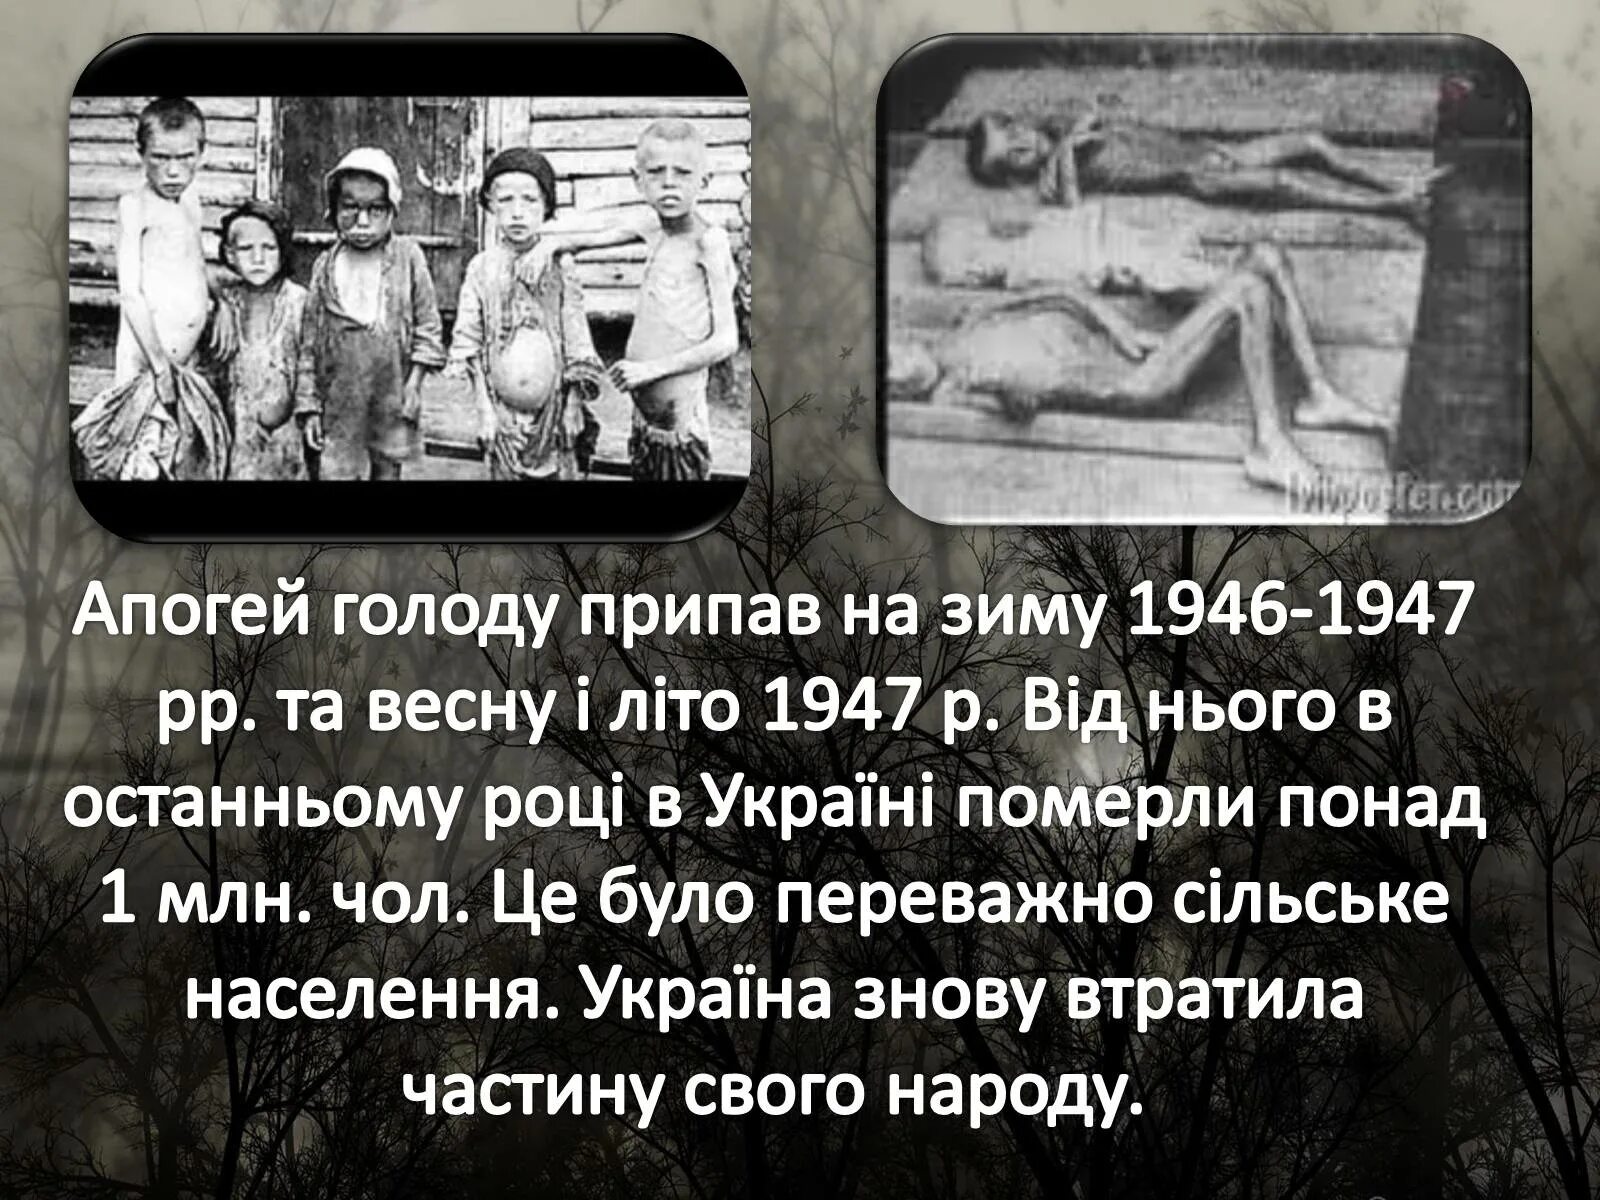 Голод 1946-1947 фотохроника. Голодомор в Молдове 1946-1947. Последствия голода 1946